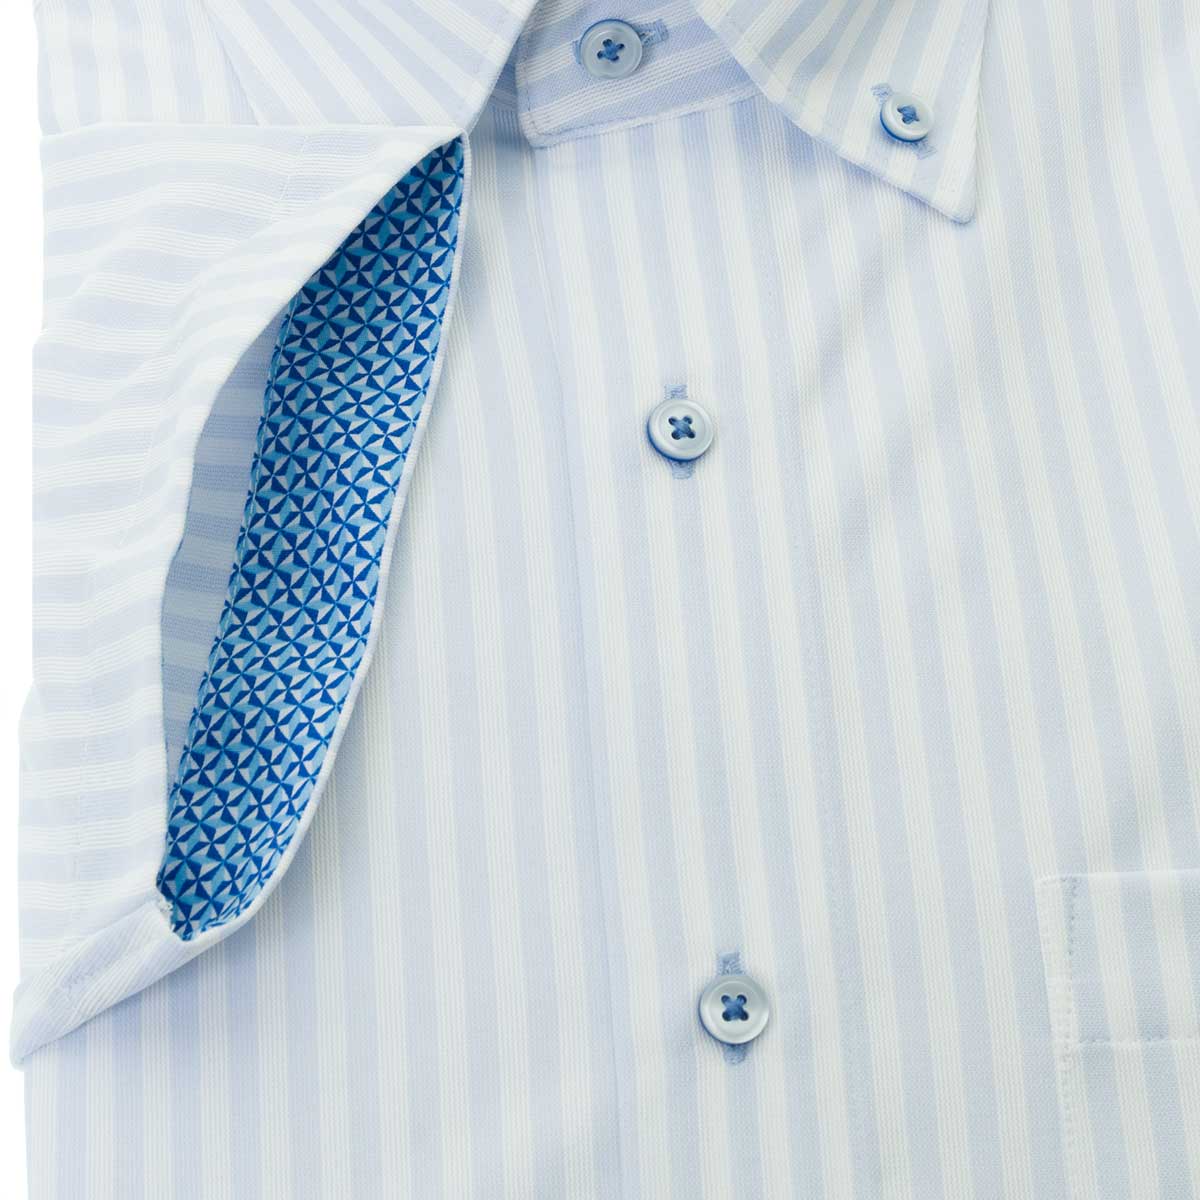 SHIRT HOUSE・ブルーレーベル 半袖スリムフィット ニットシャツ(裄詰不可)ボタンダウン ブルー ワイシャツ